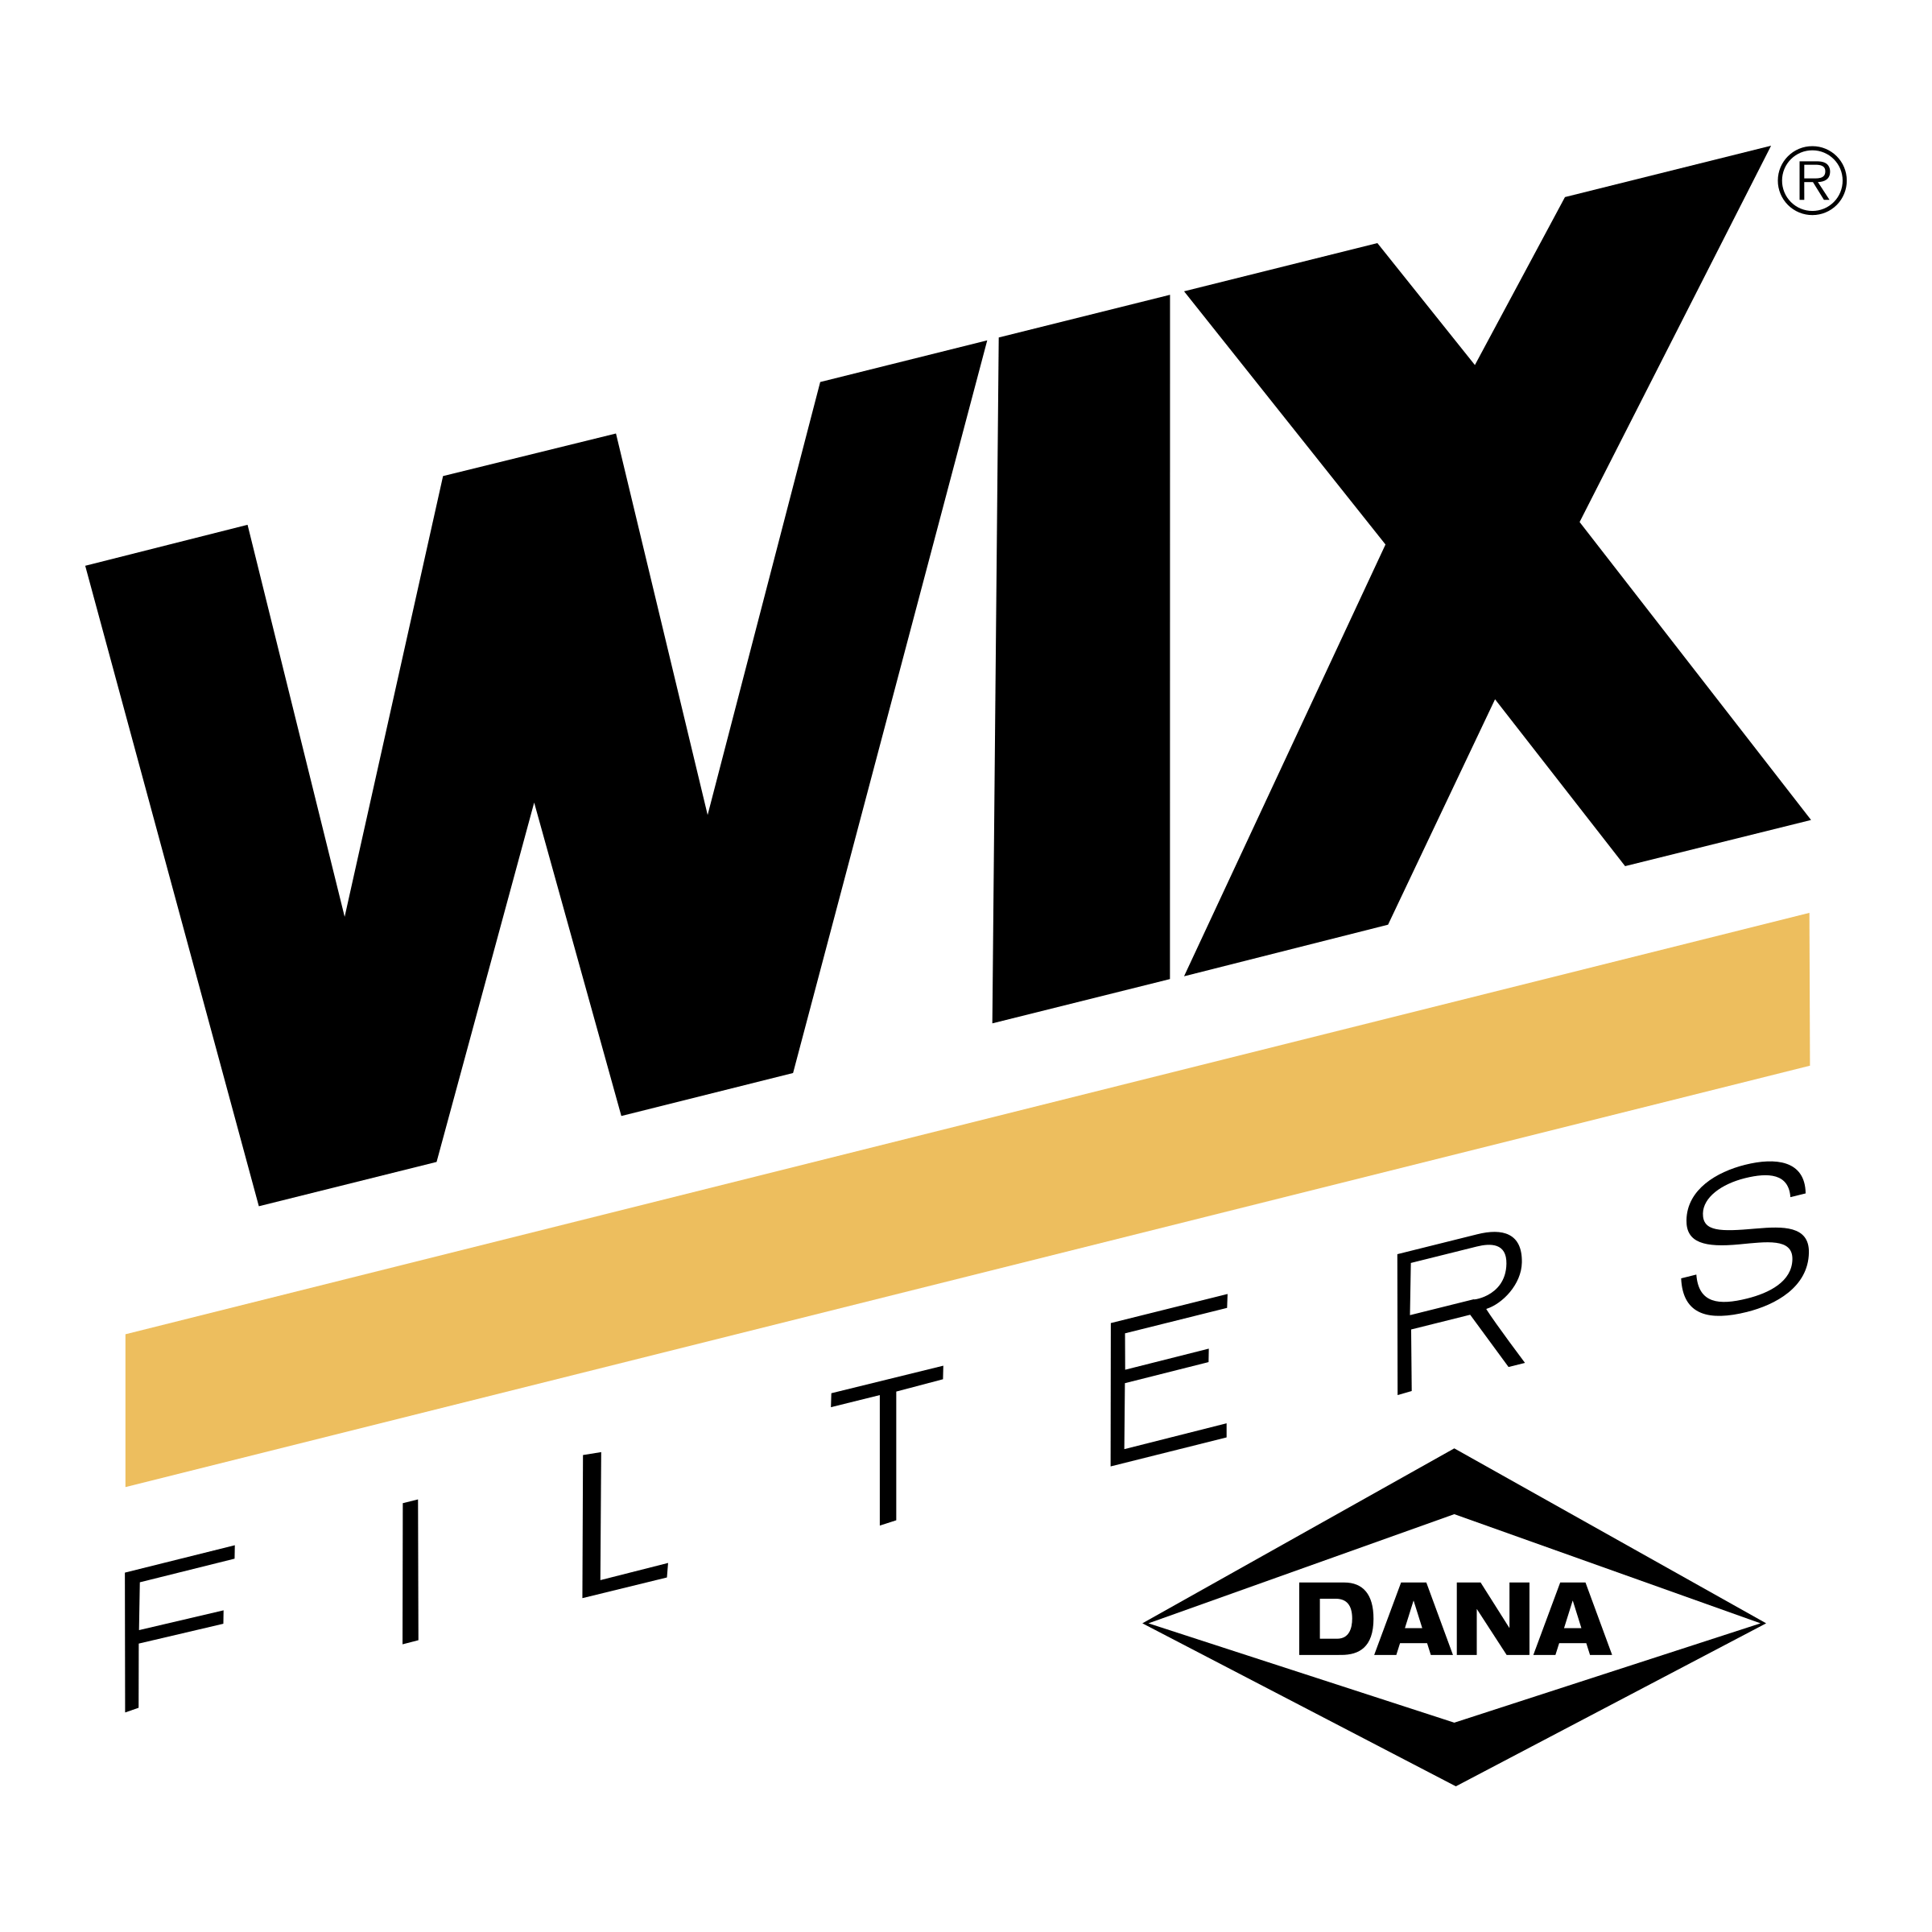 Wacoal Logo - Wix Filters Logo PNG Transparent & SVG Vector - Freebie Supply